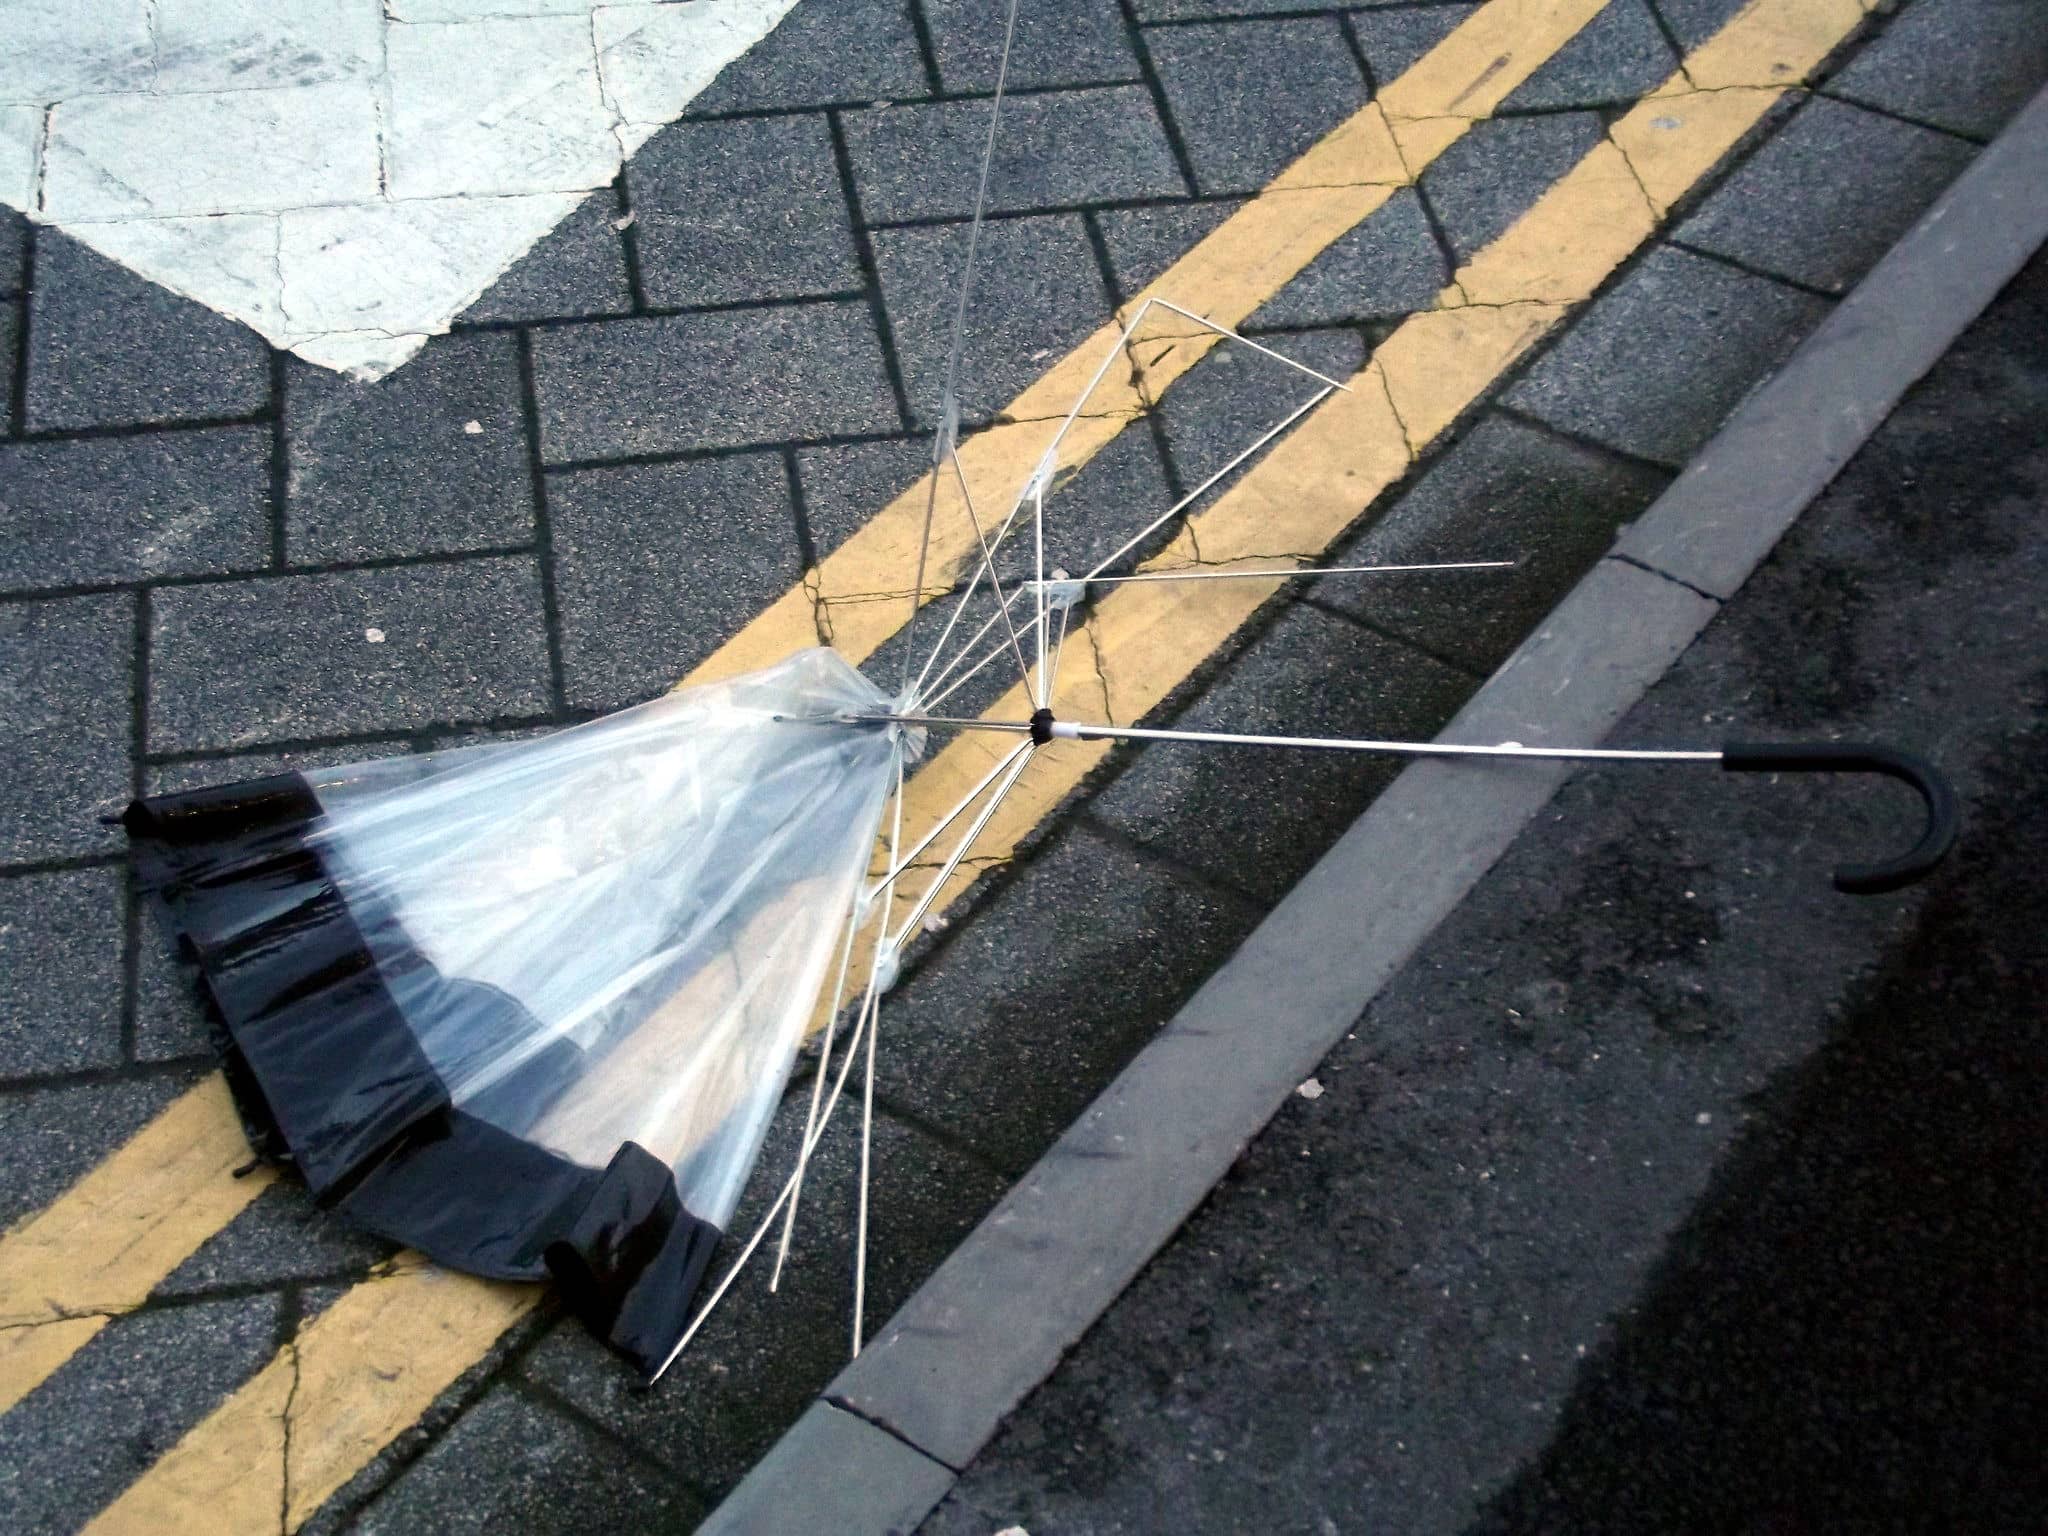 broken umbrella